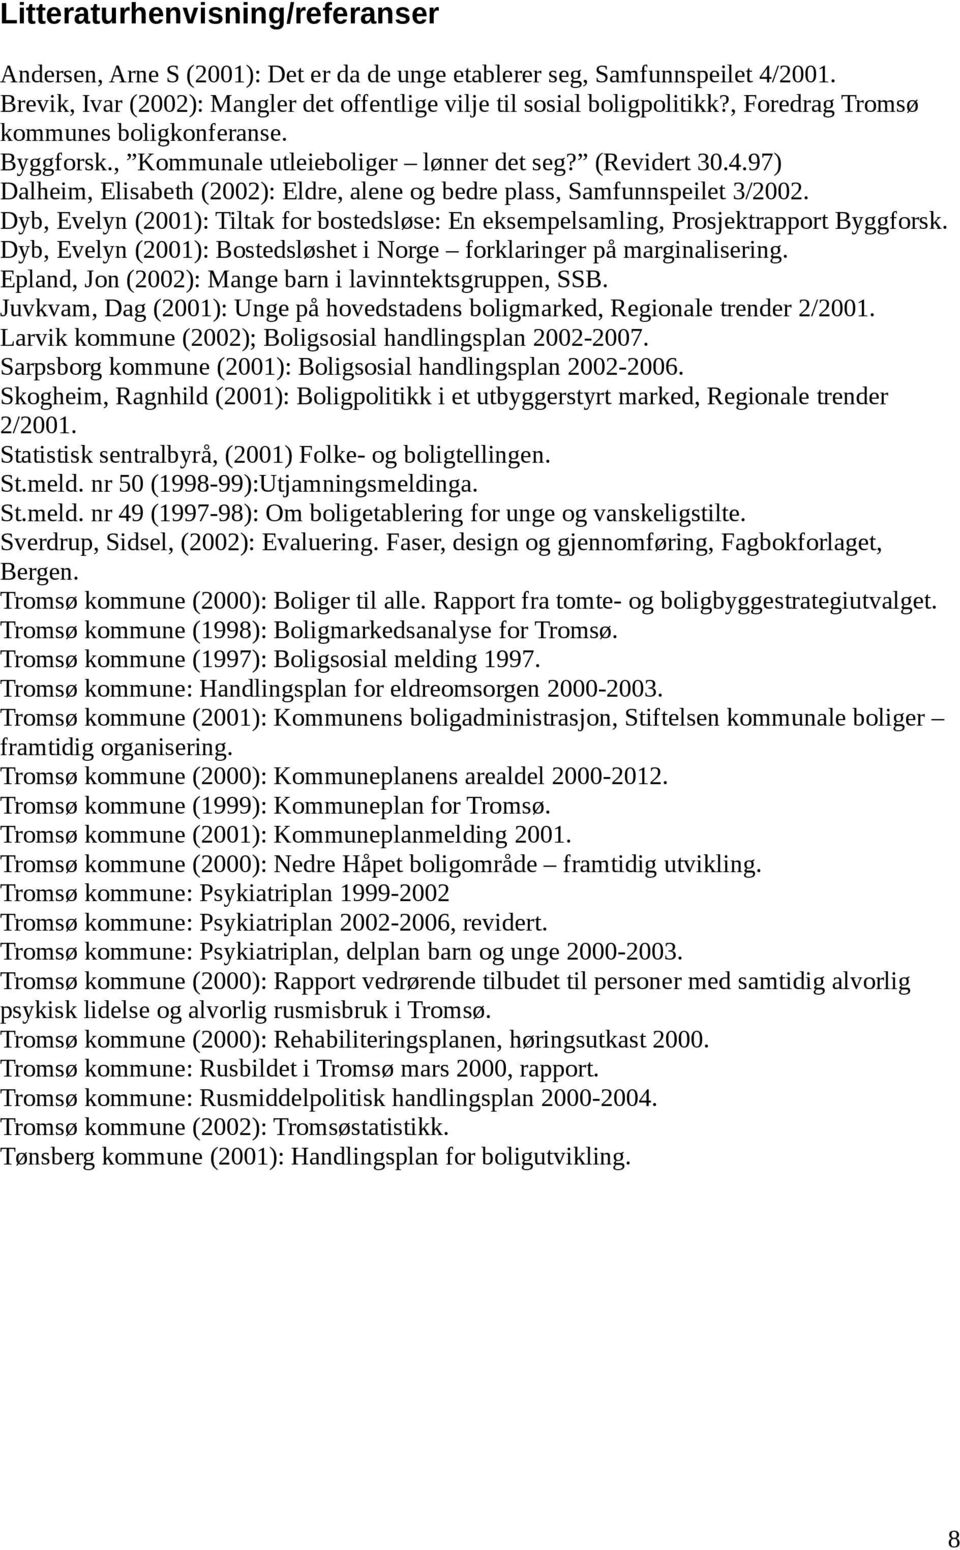 Dyb, Evelyn (2001): Tiltak for bostedsløse: En eksempelsamling, Prosjektrapport Byggforsk. Dyb, Evelyn (2001): Bostedsløshet i Norge forklaringer på marginalisering.